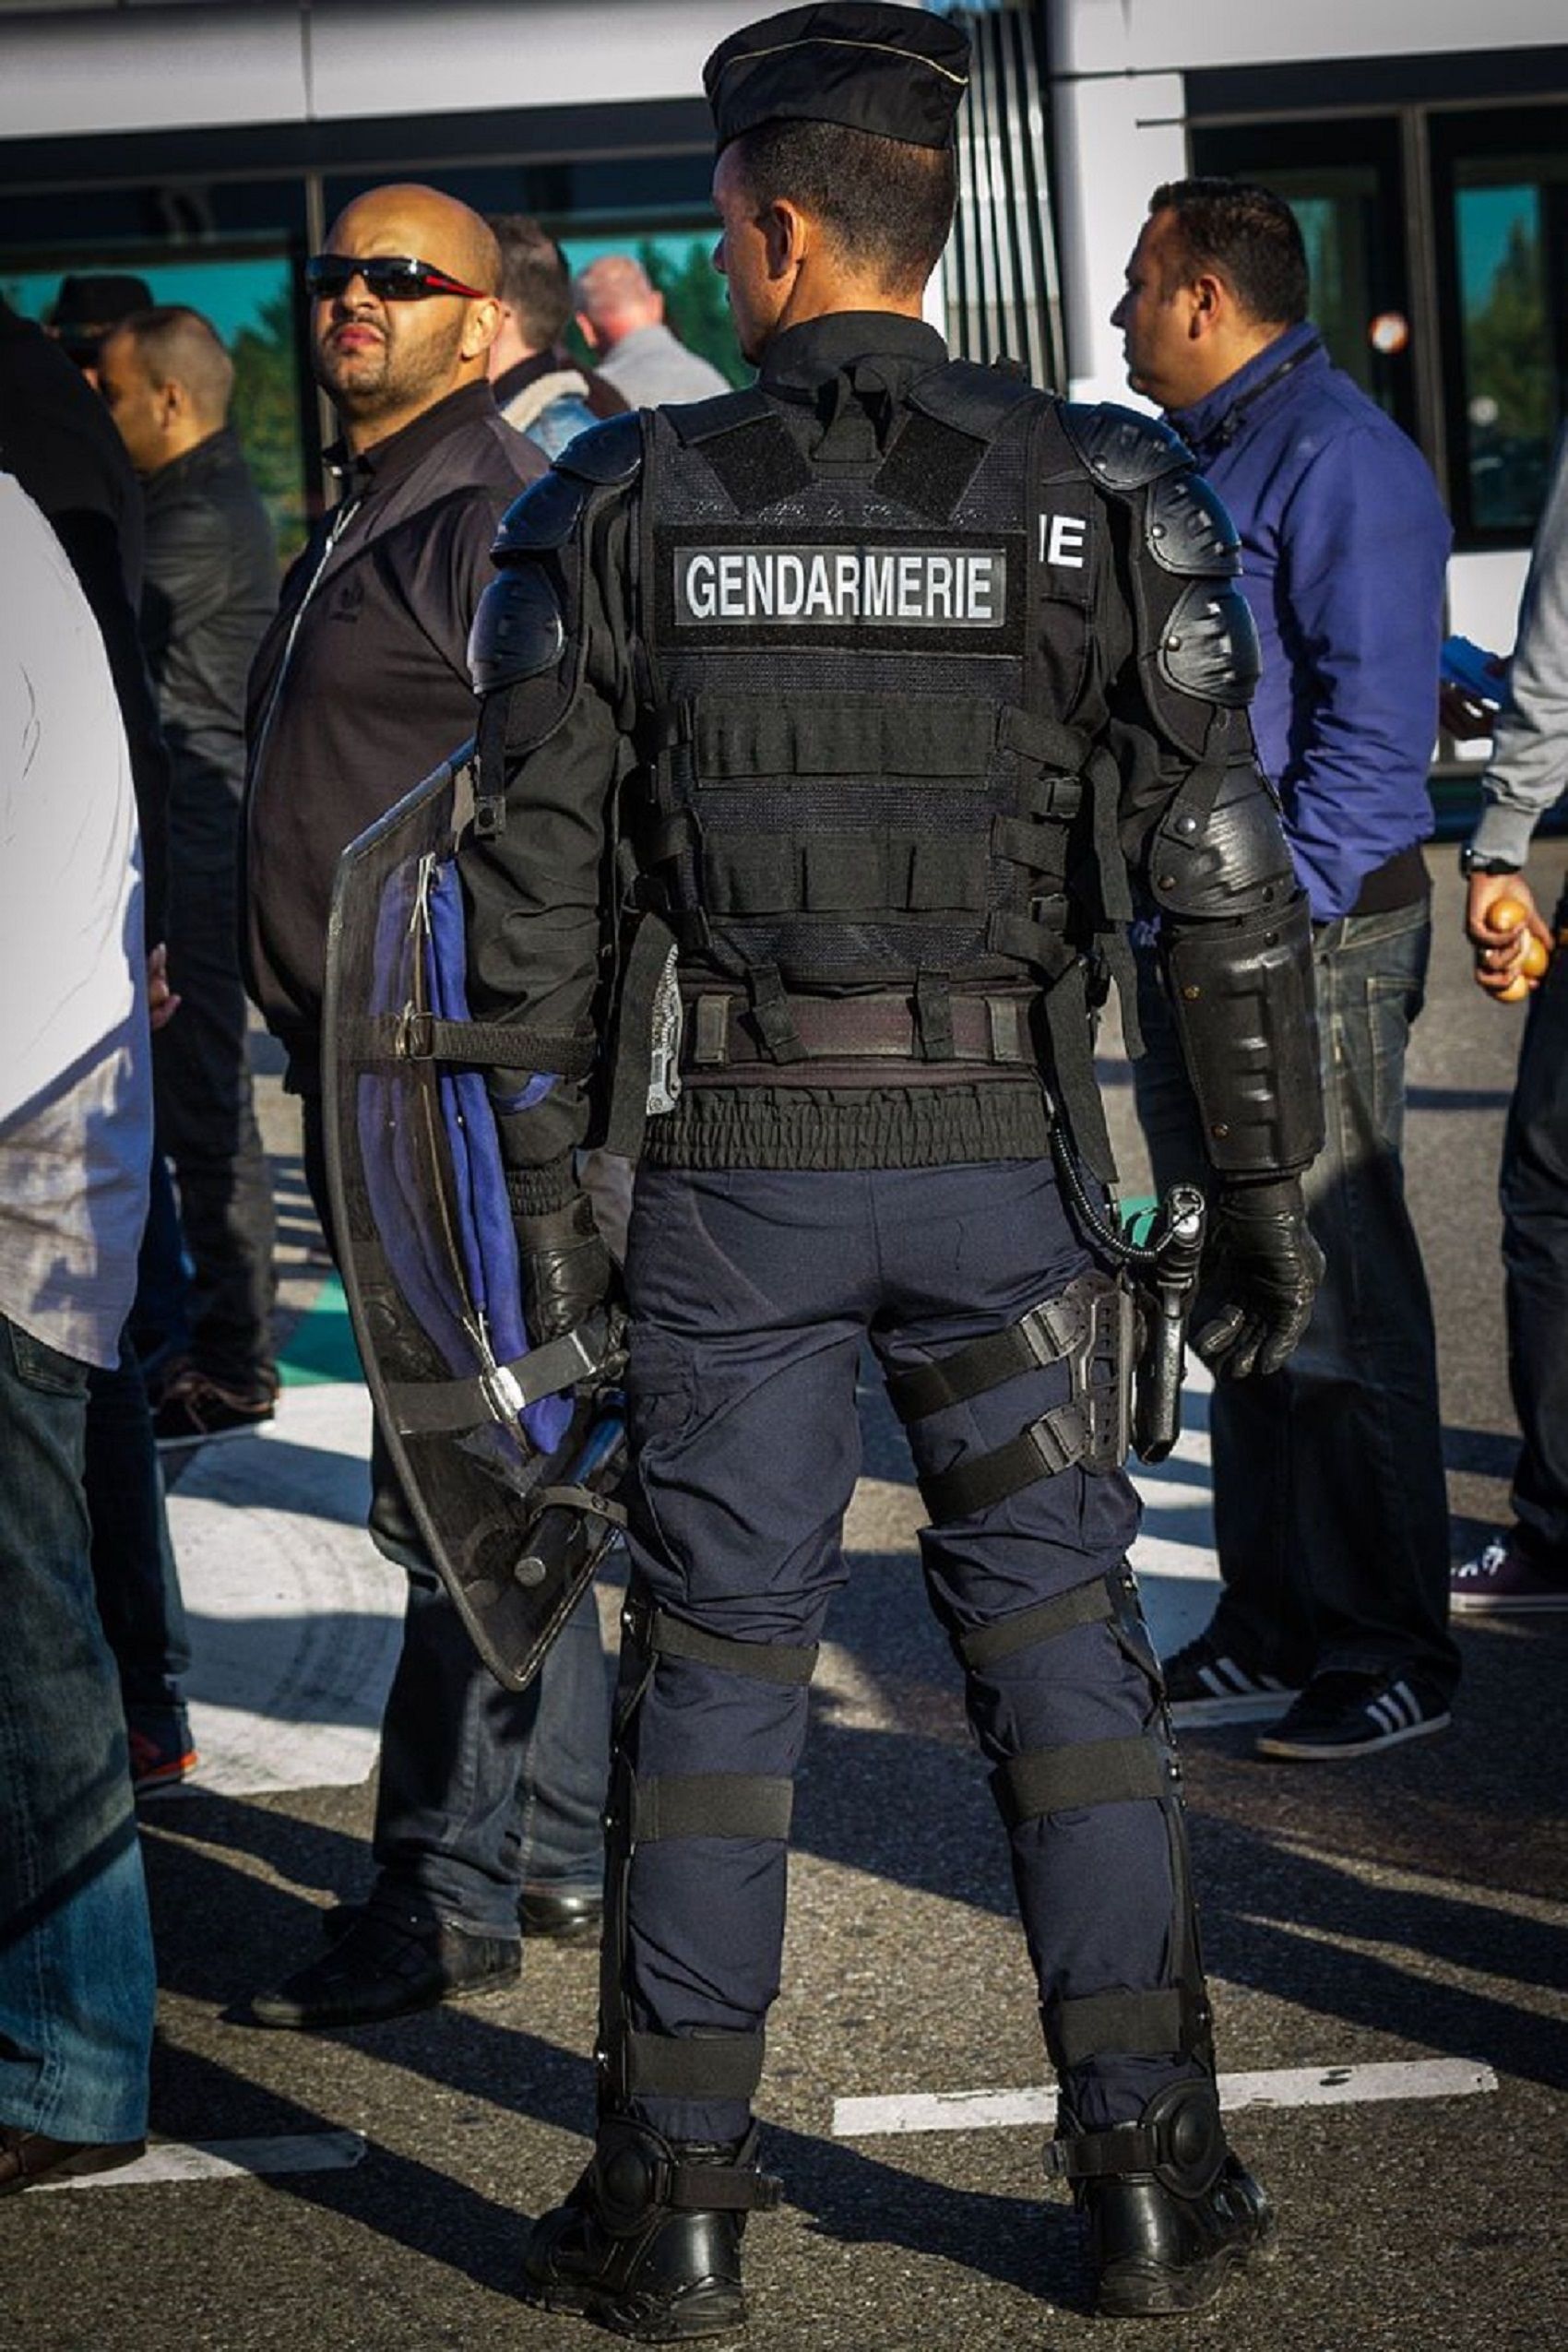 Policia França / Wikipedia